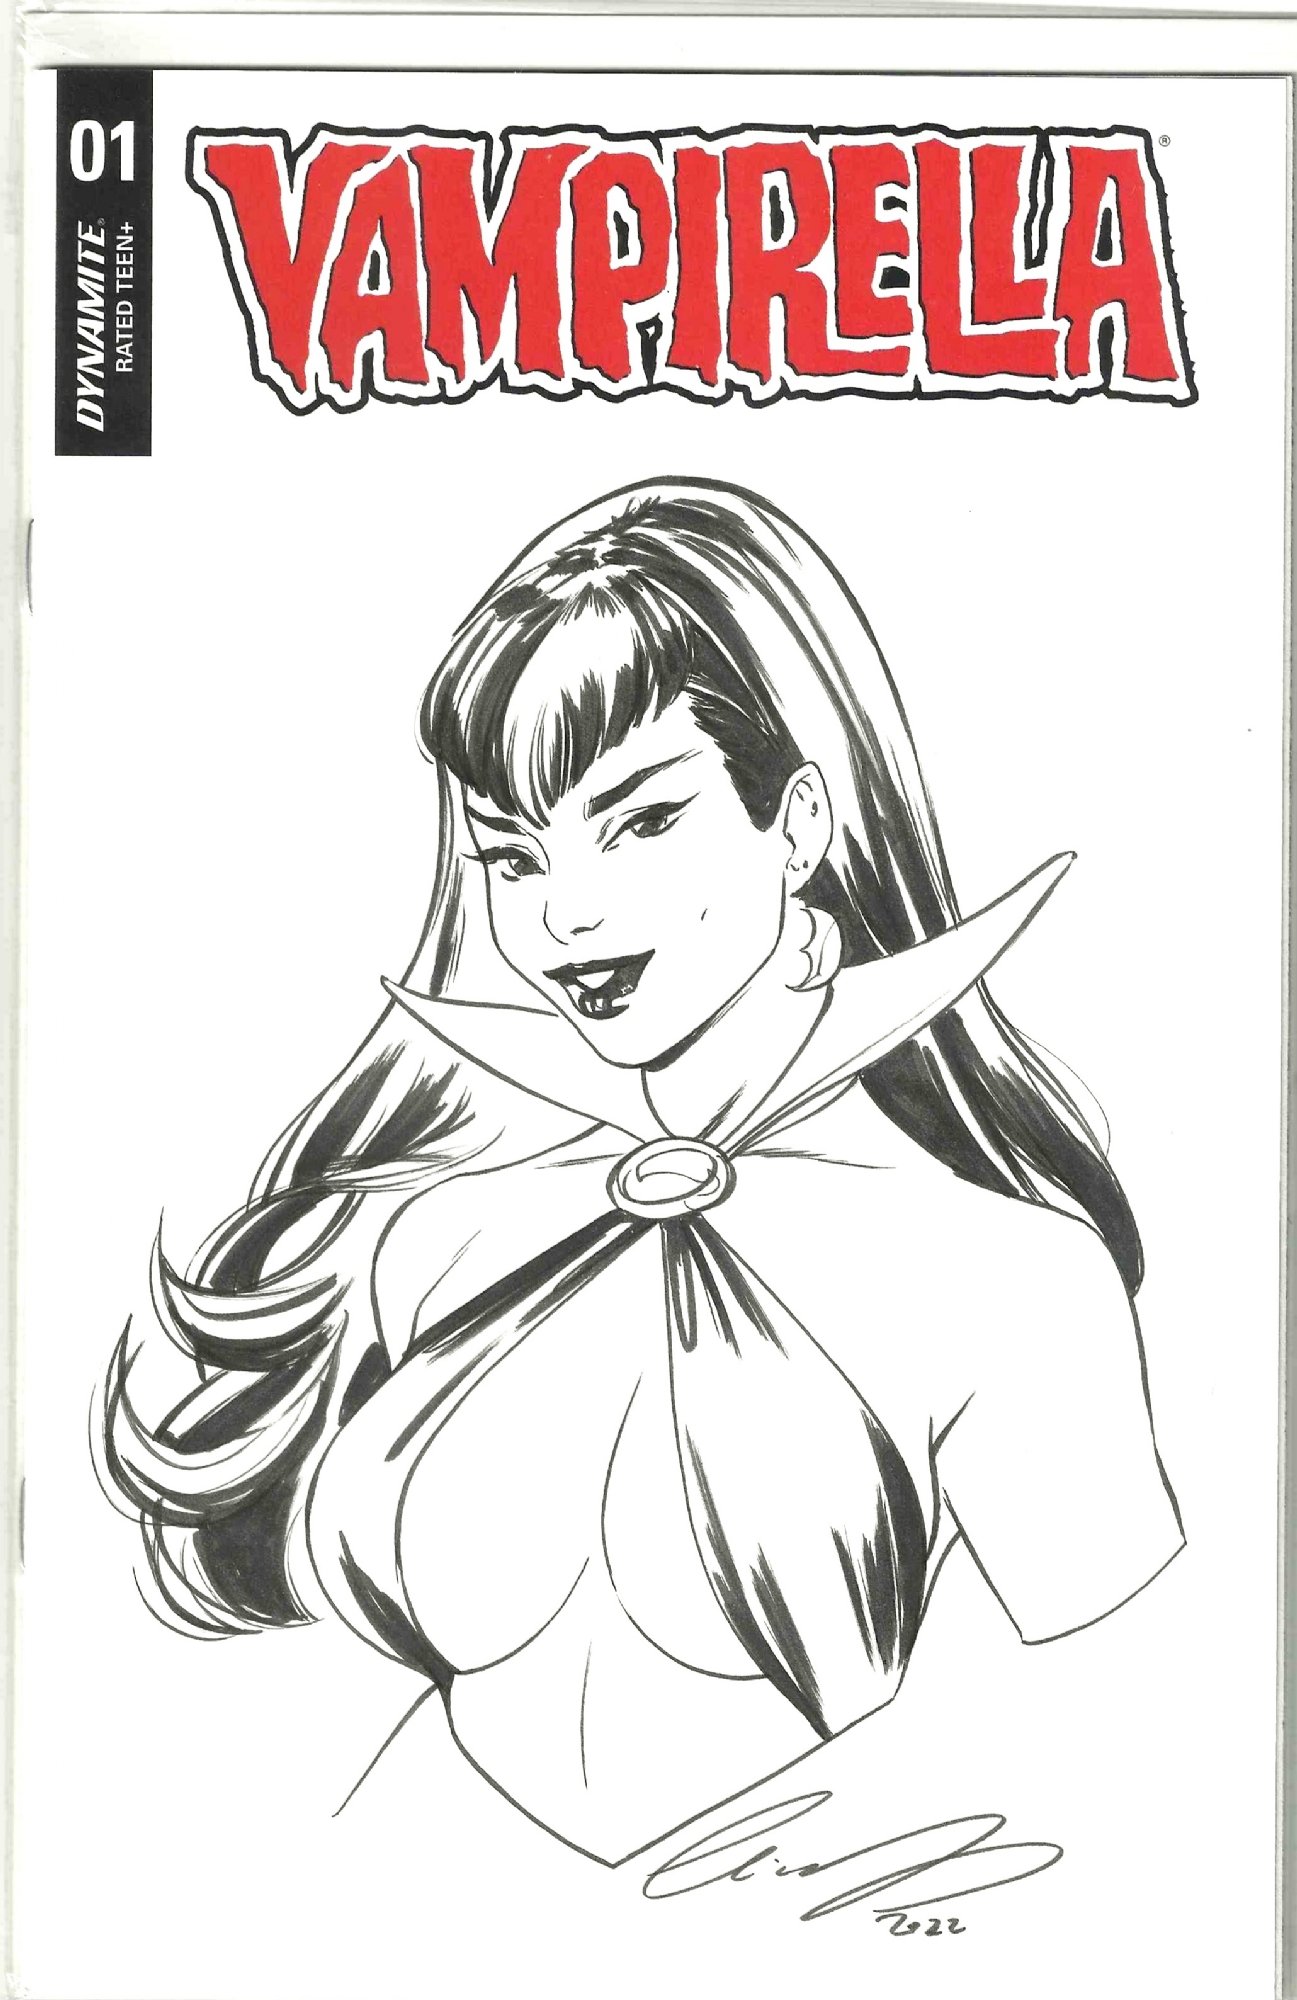 Vampirella drawing